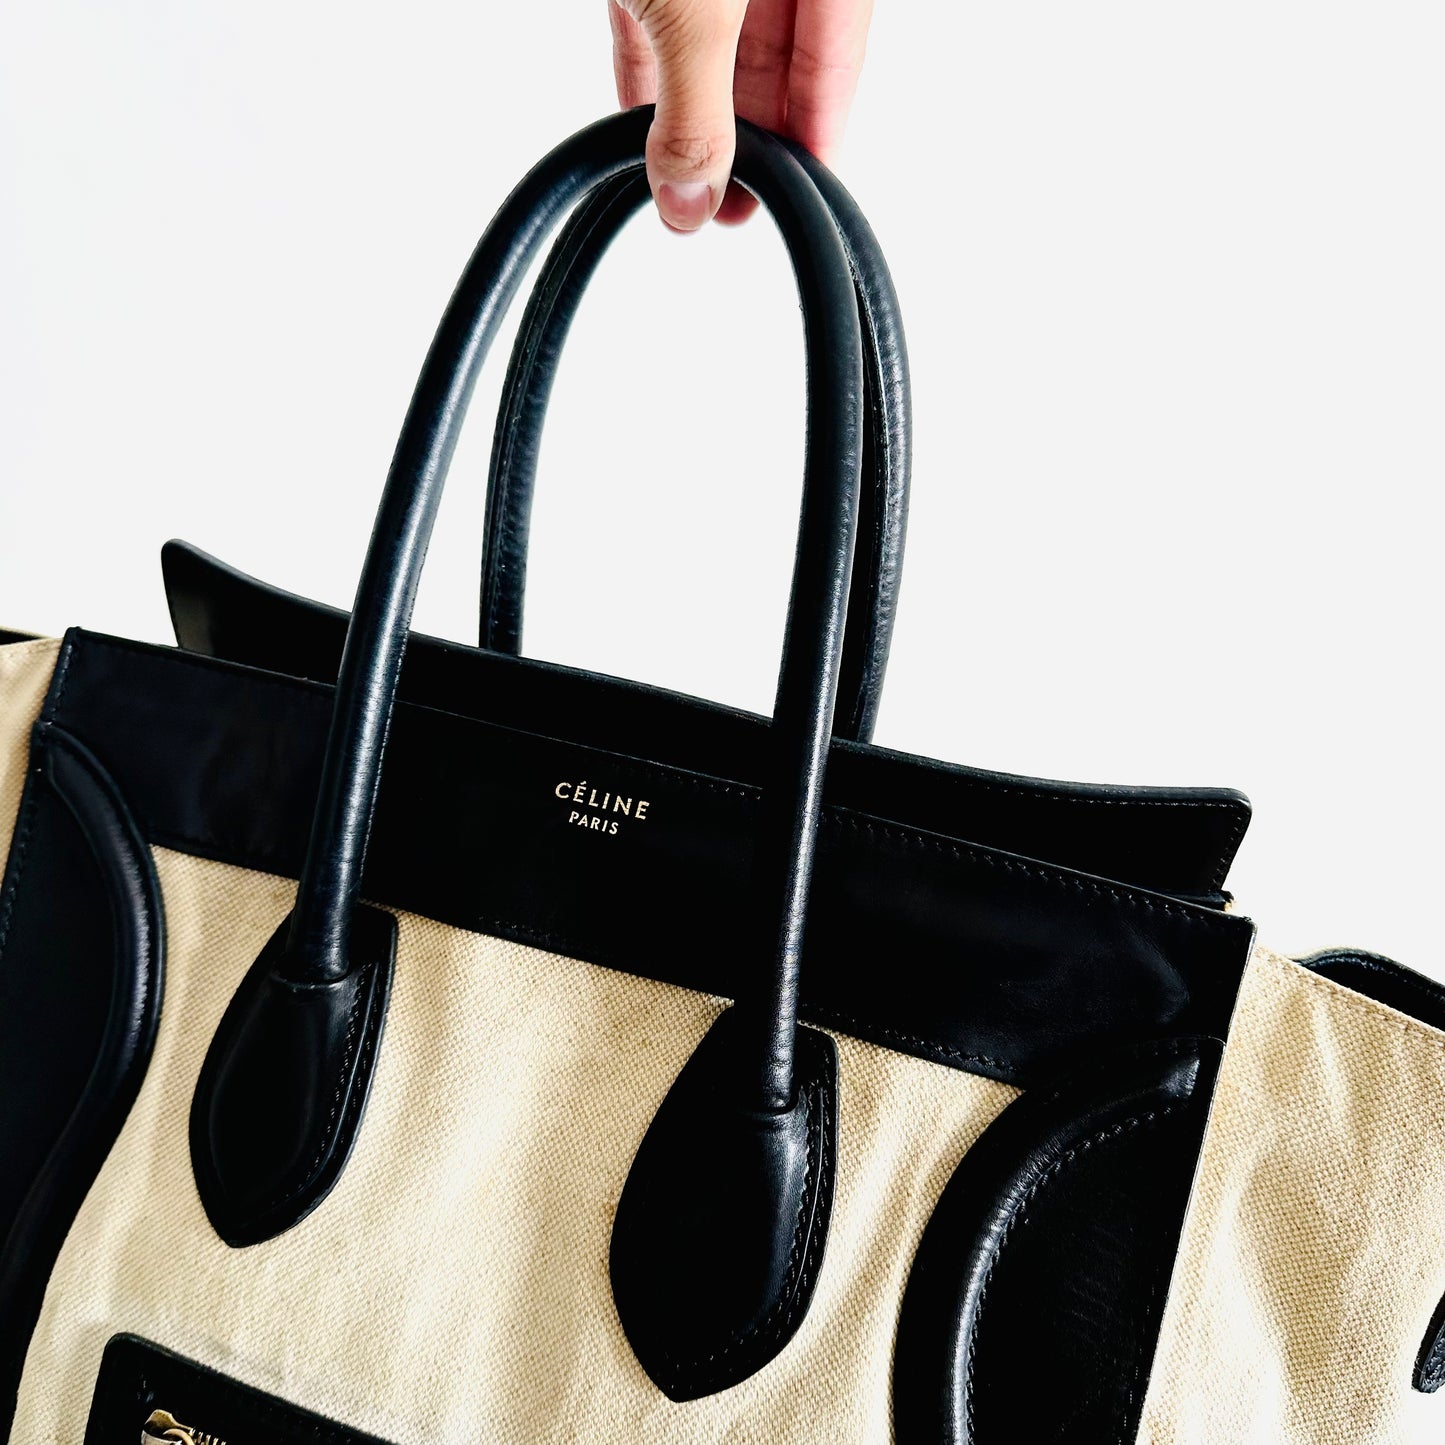 Celine Panda Black & White GHW Mini Luggage Top Handle Tote Bag